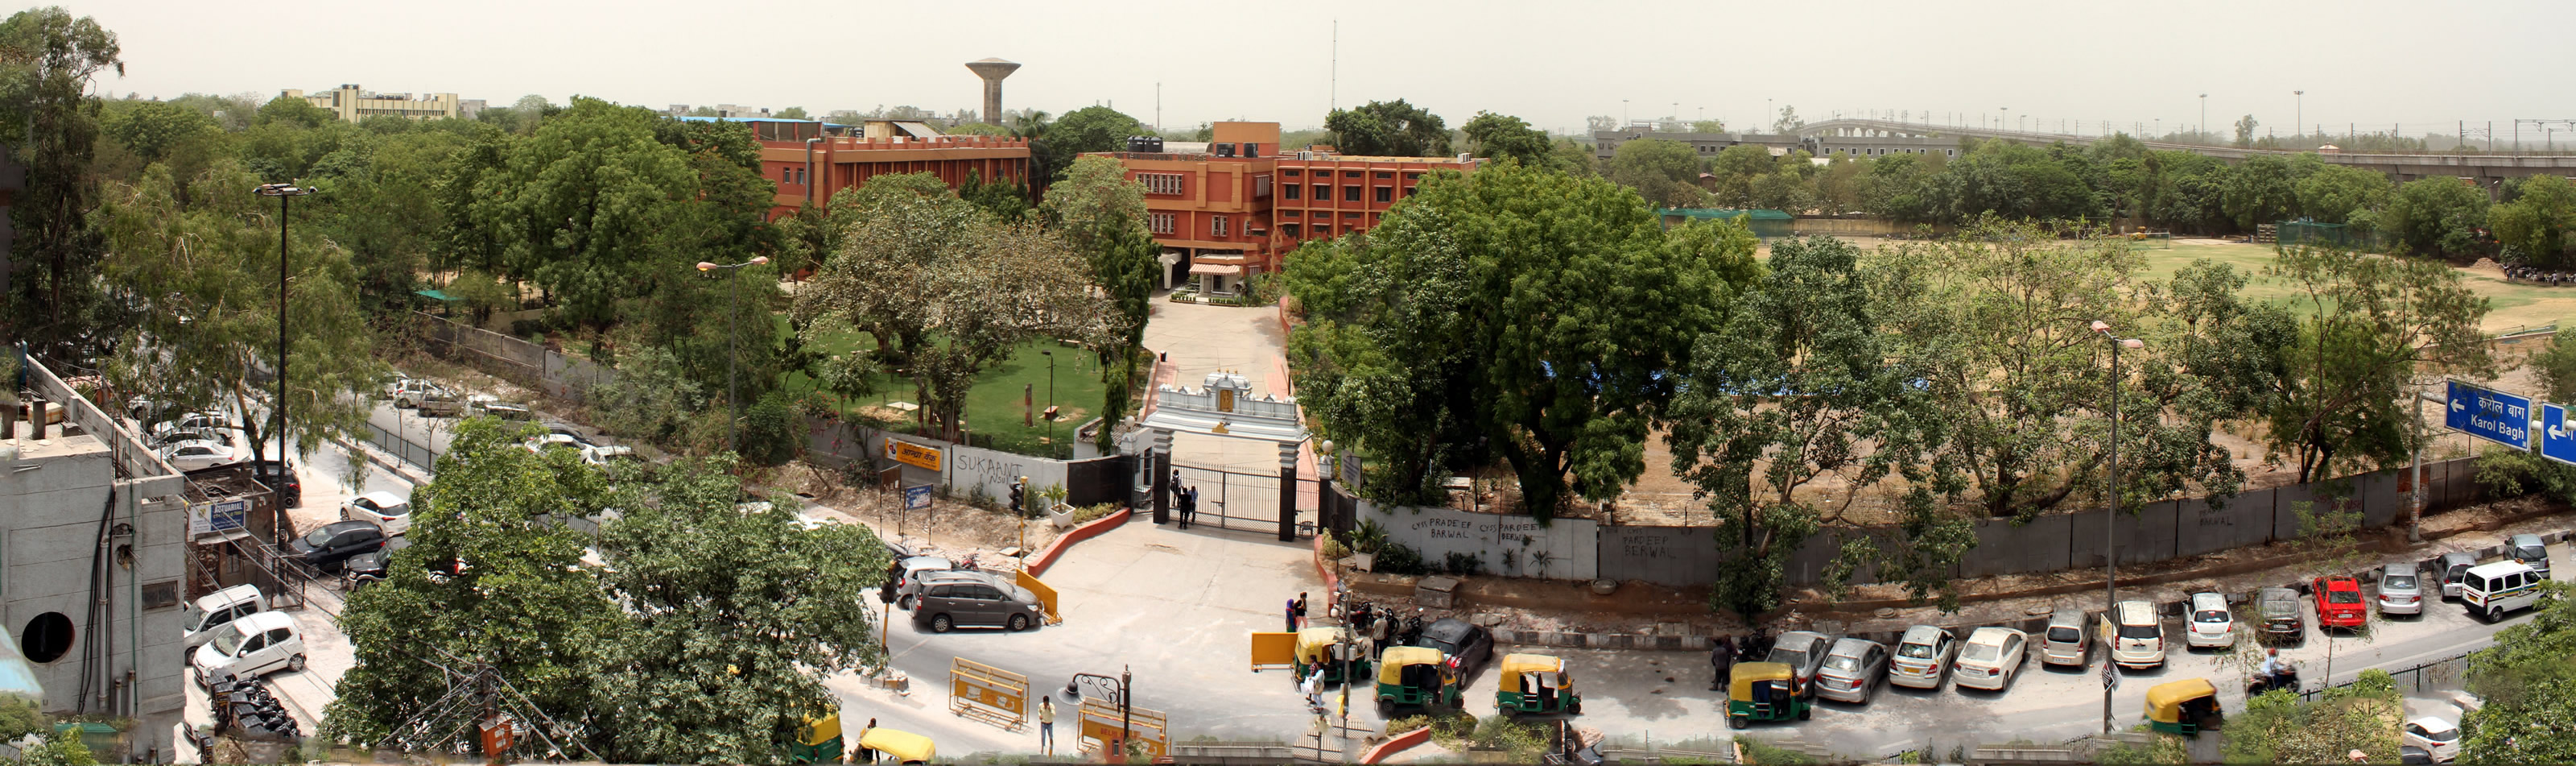 Sri Venkateswara College, New Delhi Image